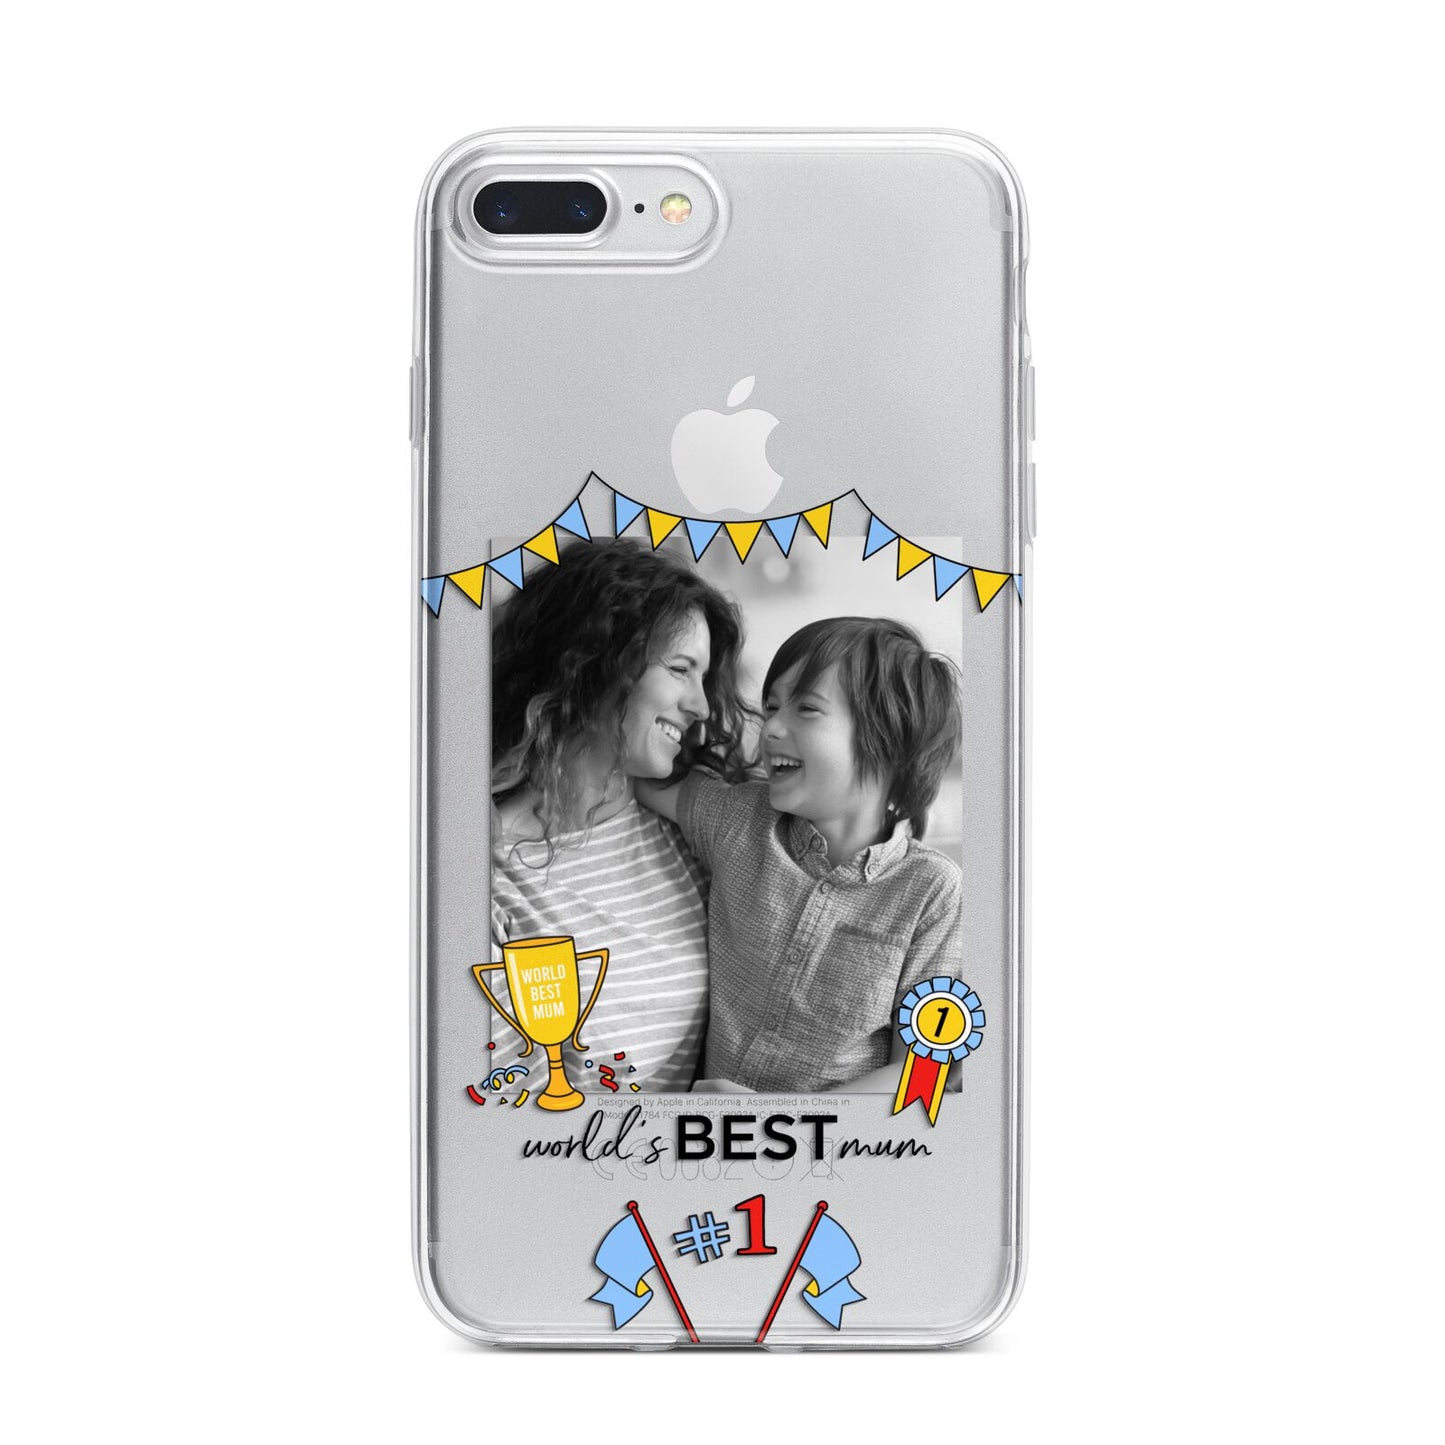 Worlds Best Mum iPhone 7 Plus Bumper Case on Silver iPhone